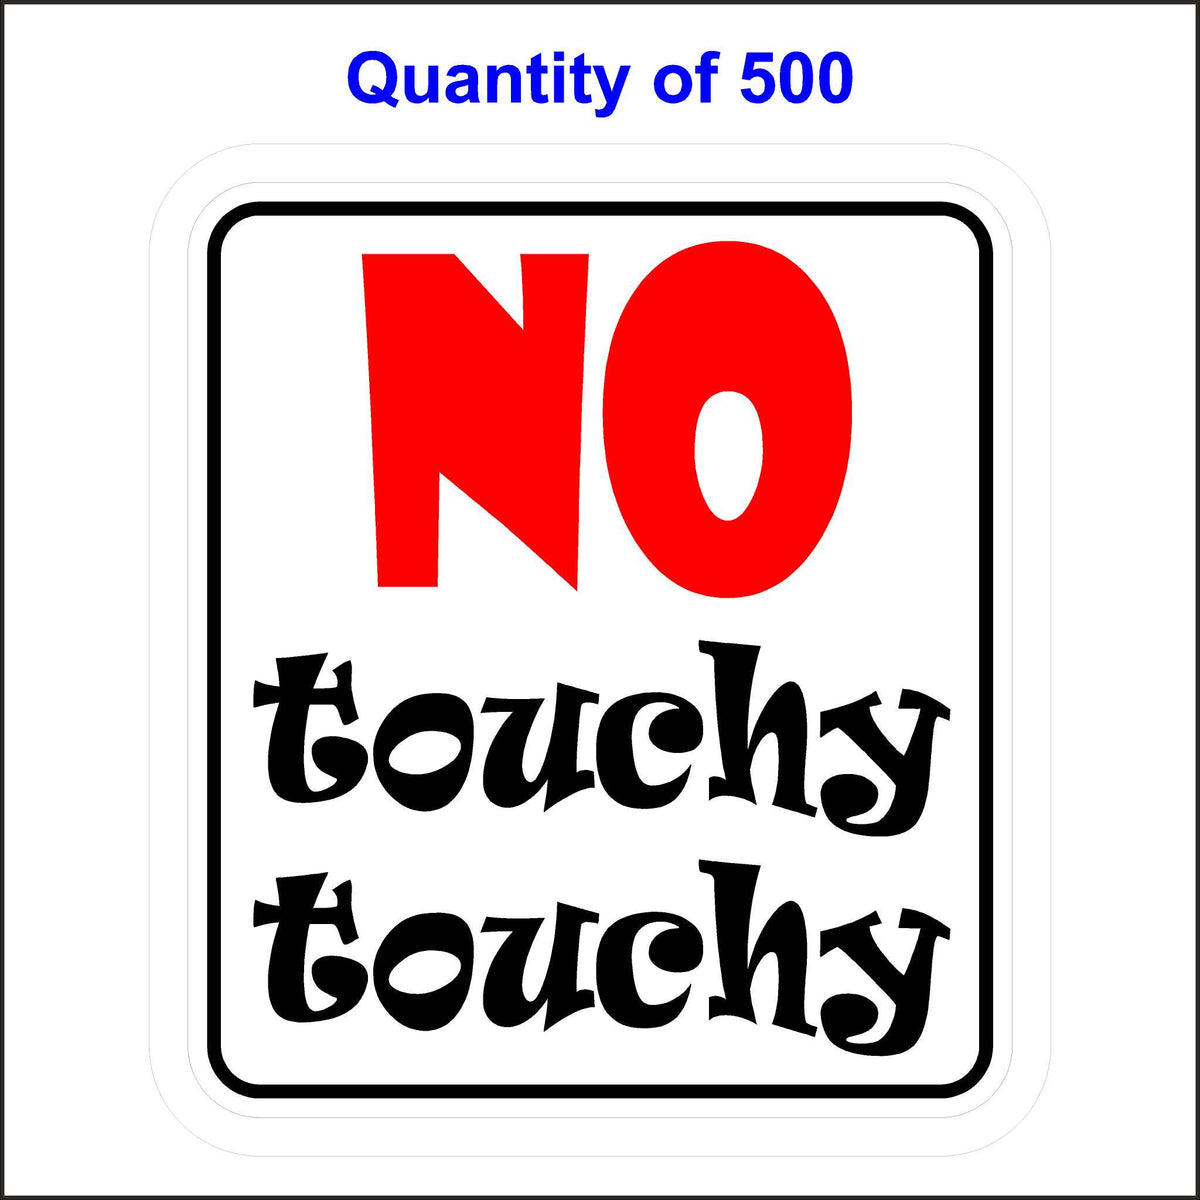 No Touchy Touchy Sticker. 500 Quantity.